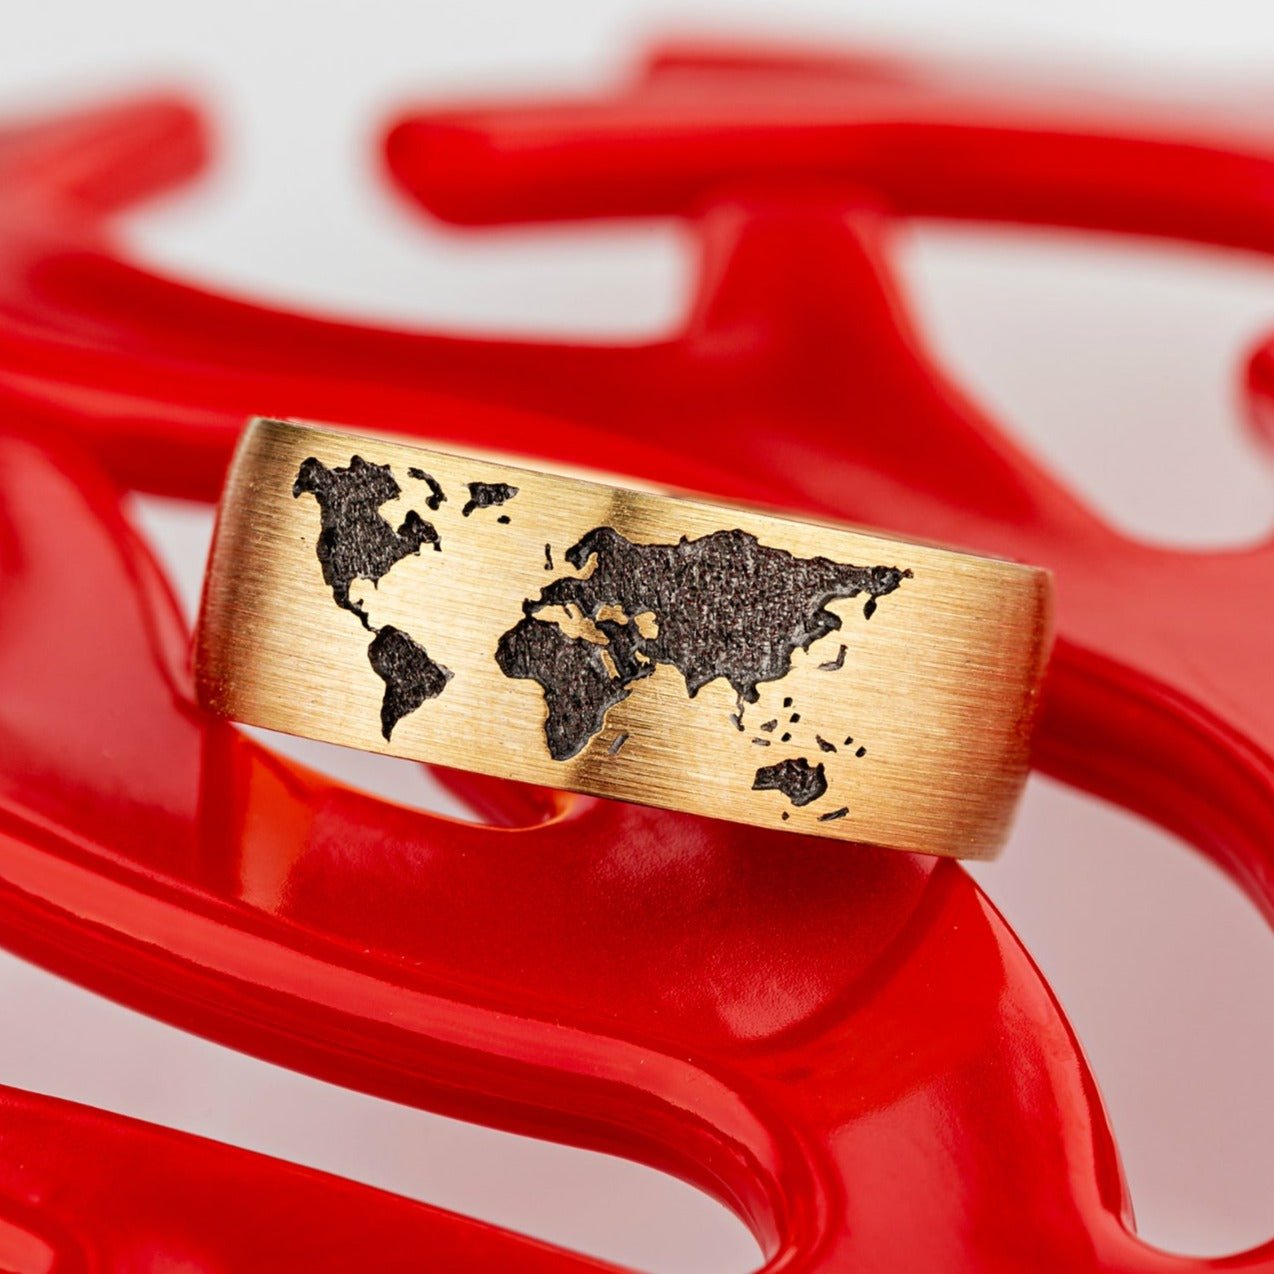 Gold ring with world map design - escorialjewelry